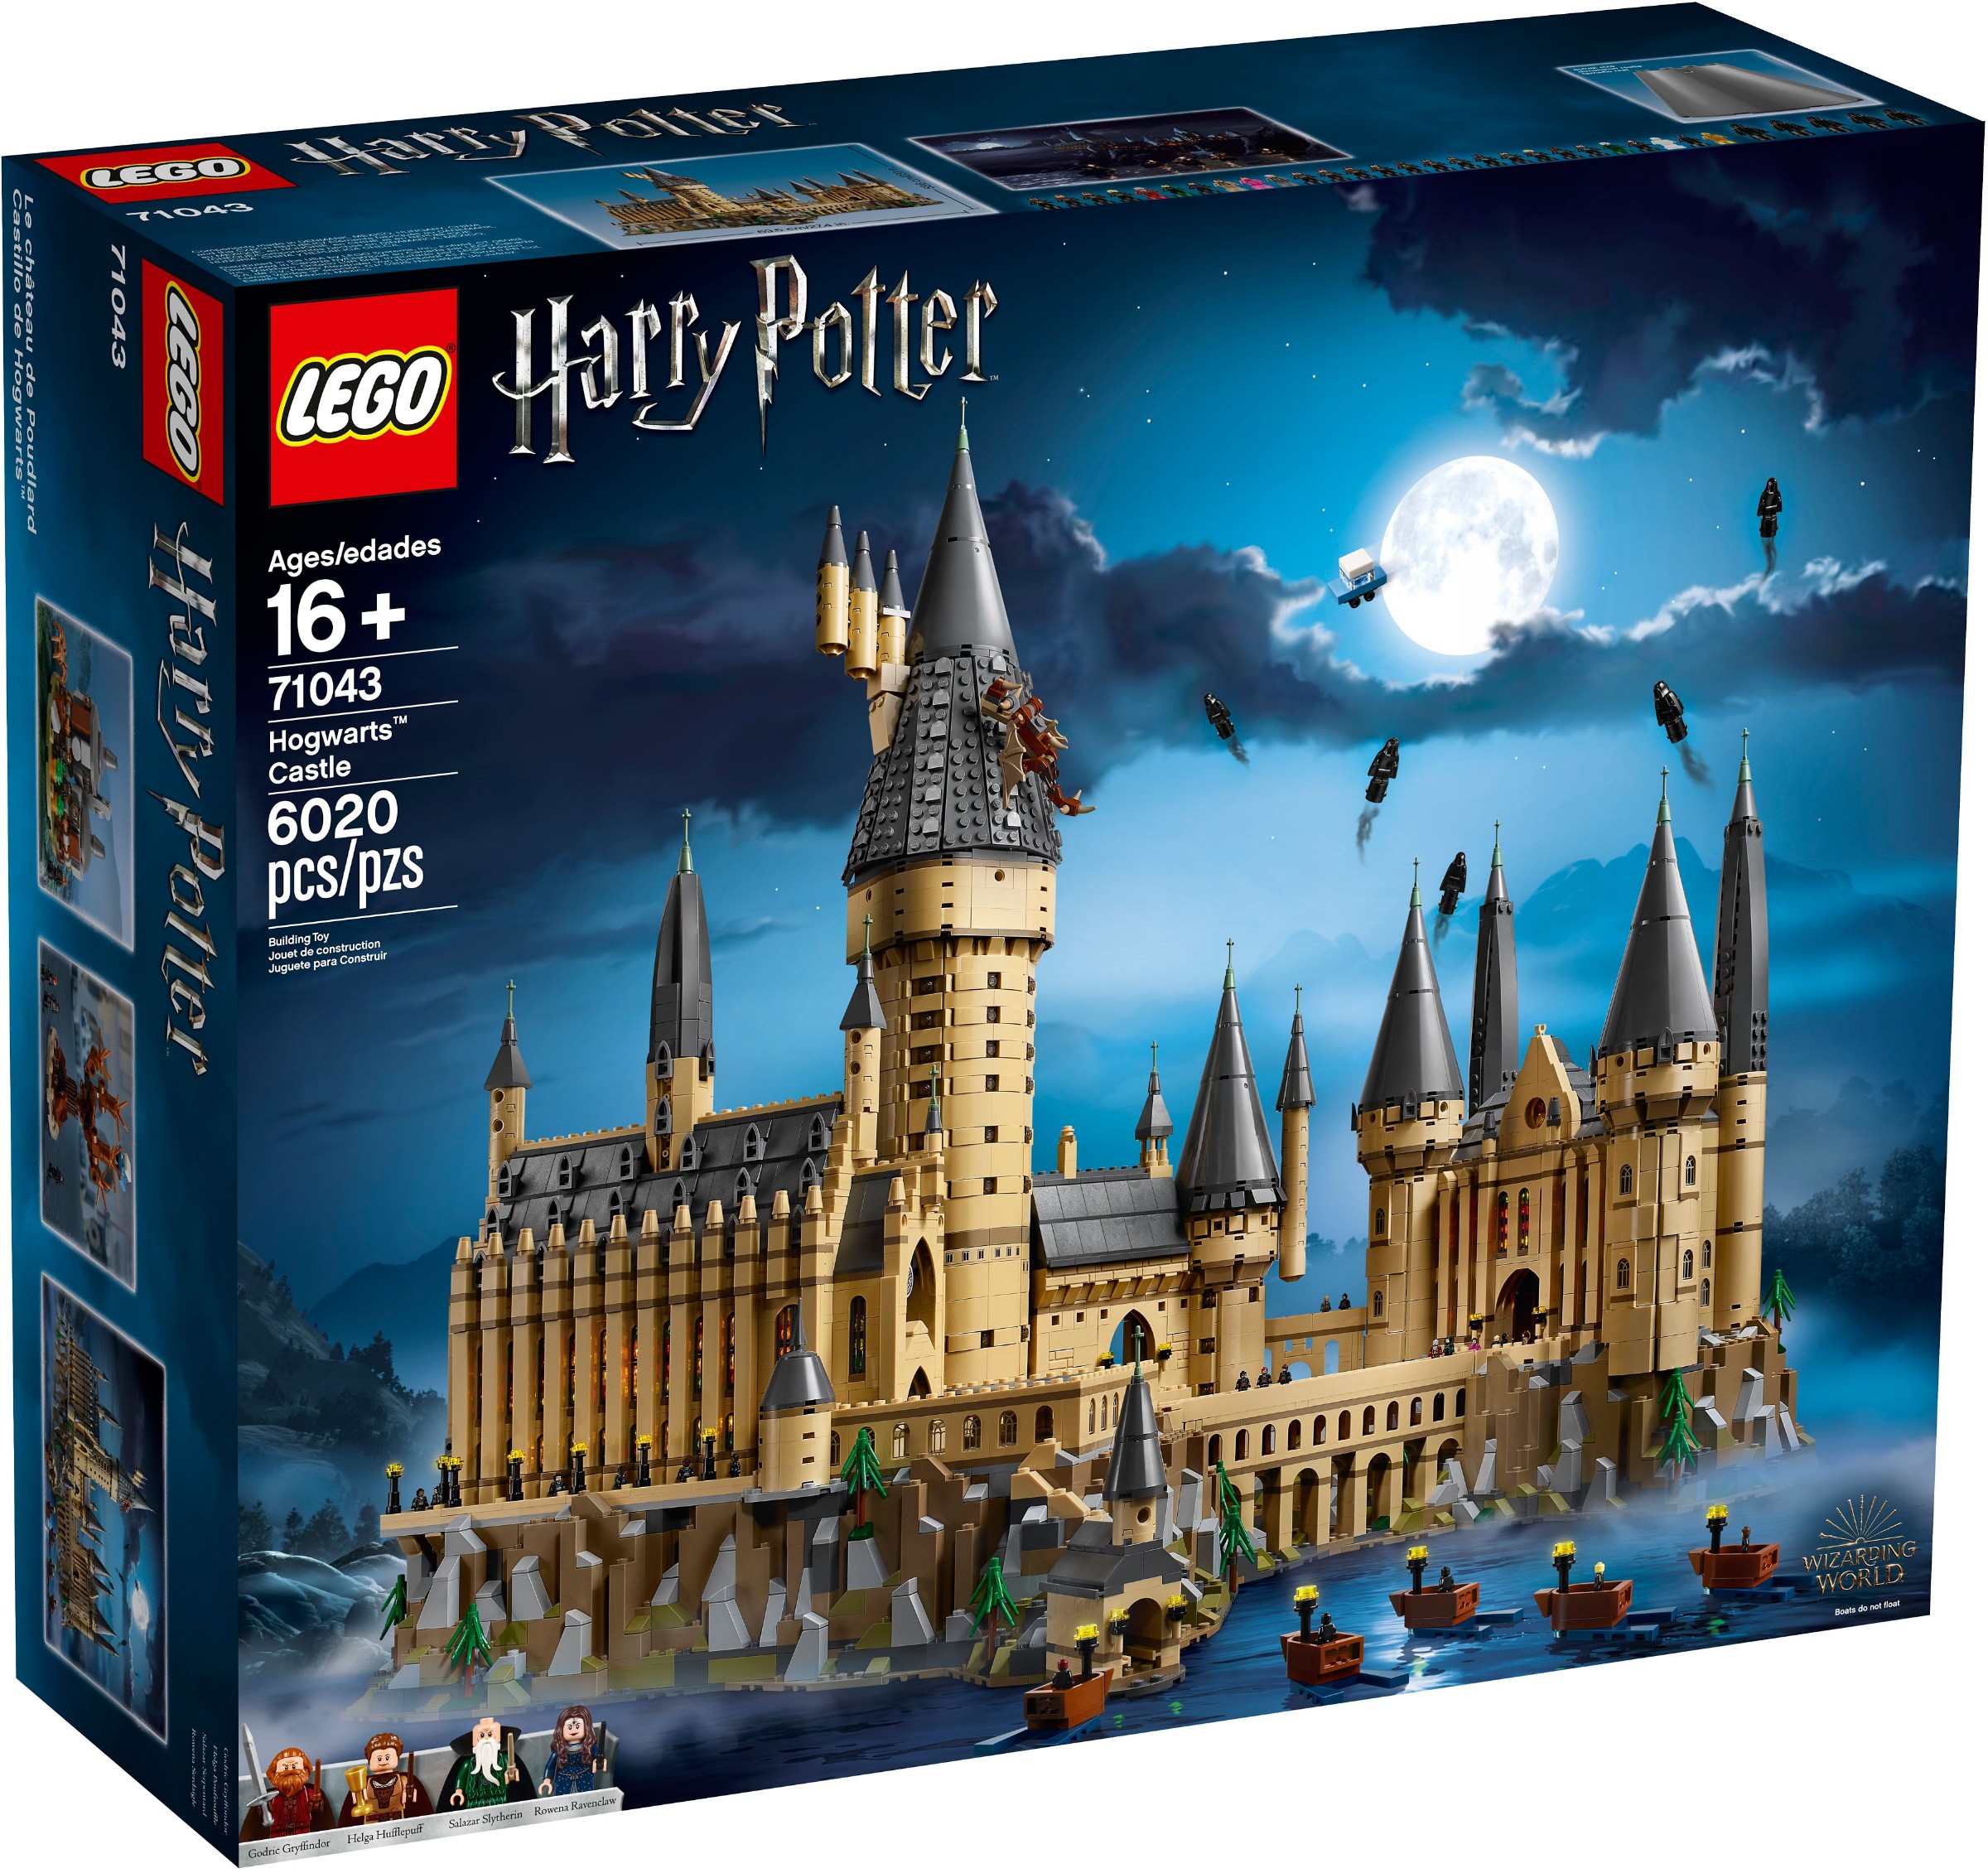 Harry Potter Castle Lego Set 2018 Deals, 54% OFF | www.propellermadrid.com